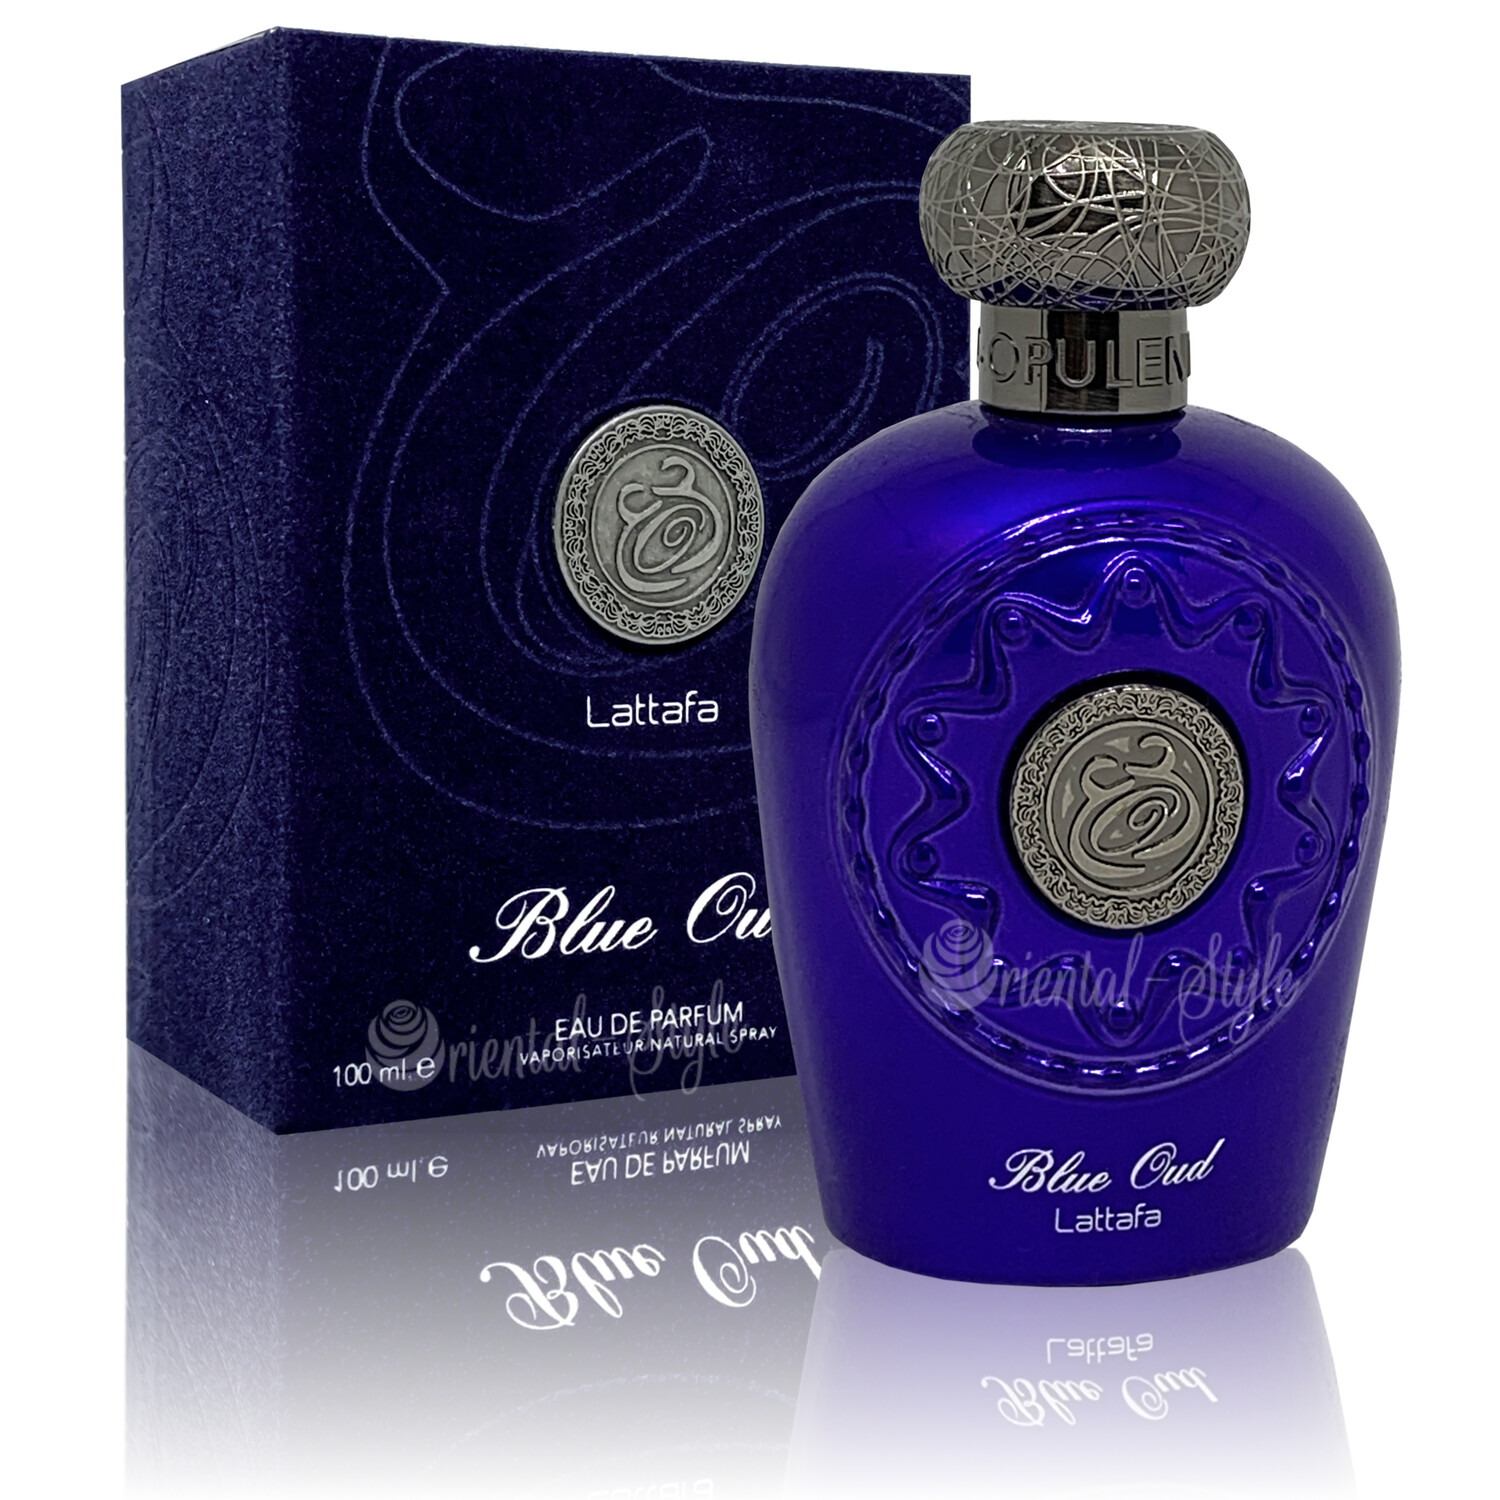 Lattafa Blue Oud Eau De Parfum 100ml